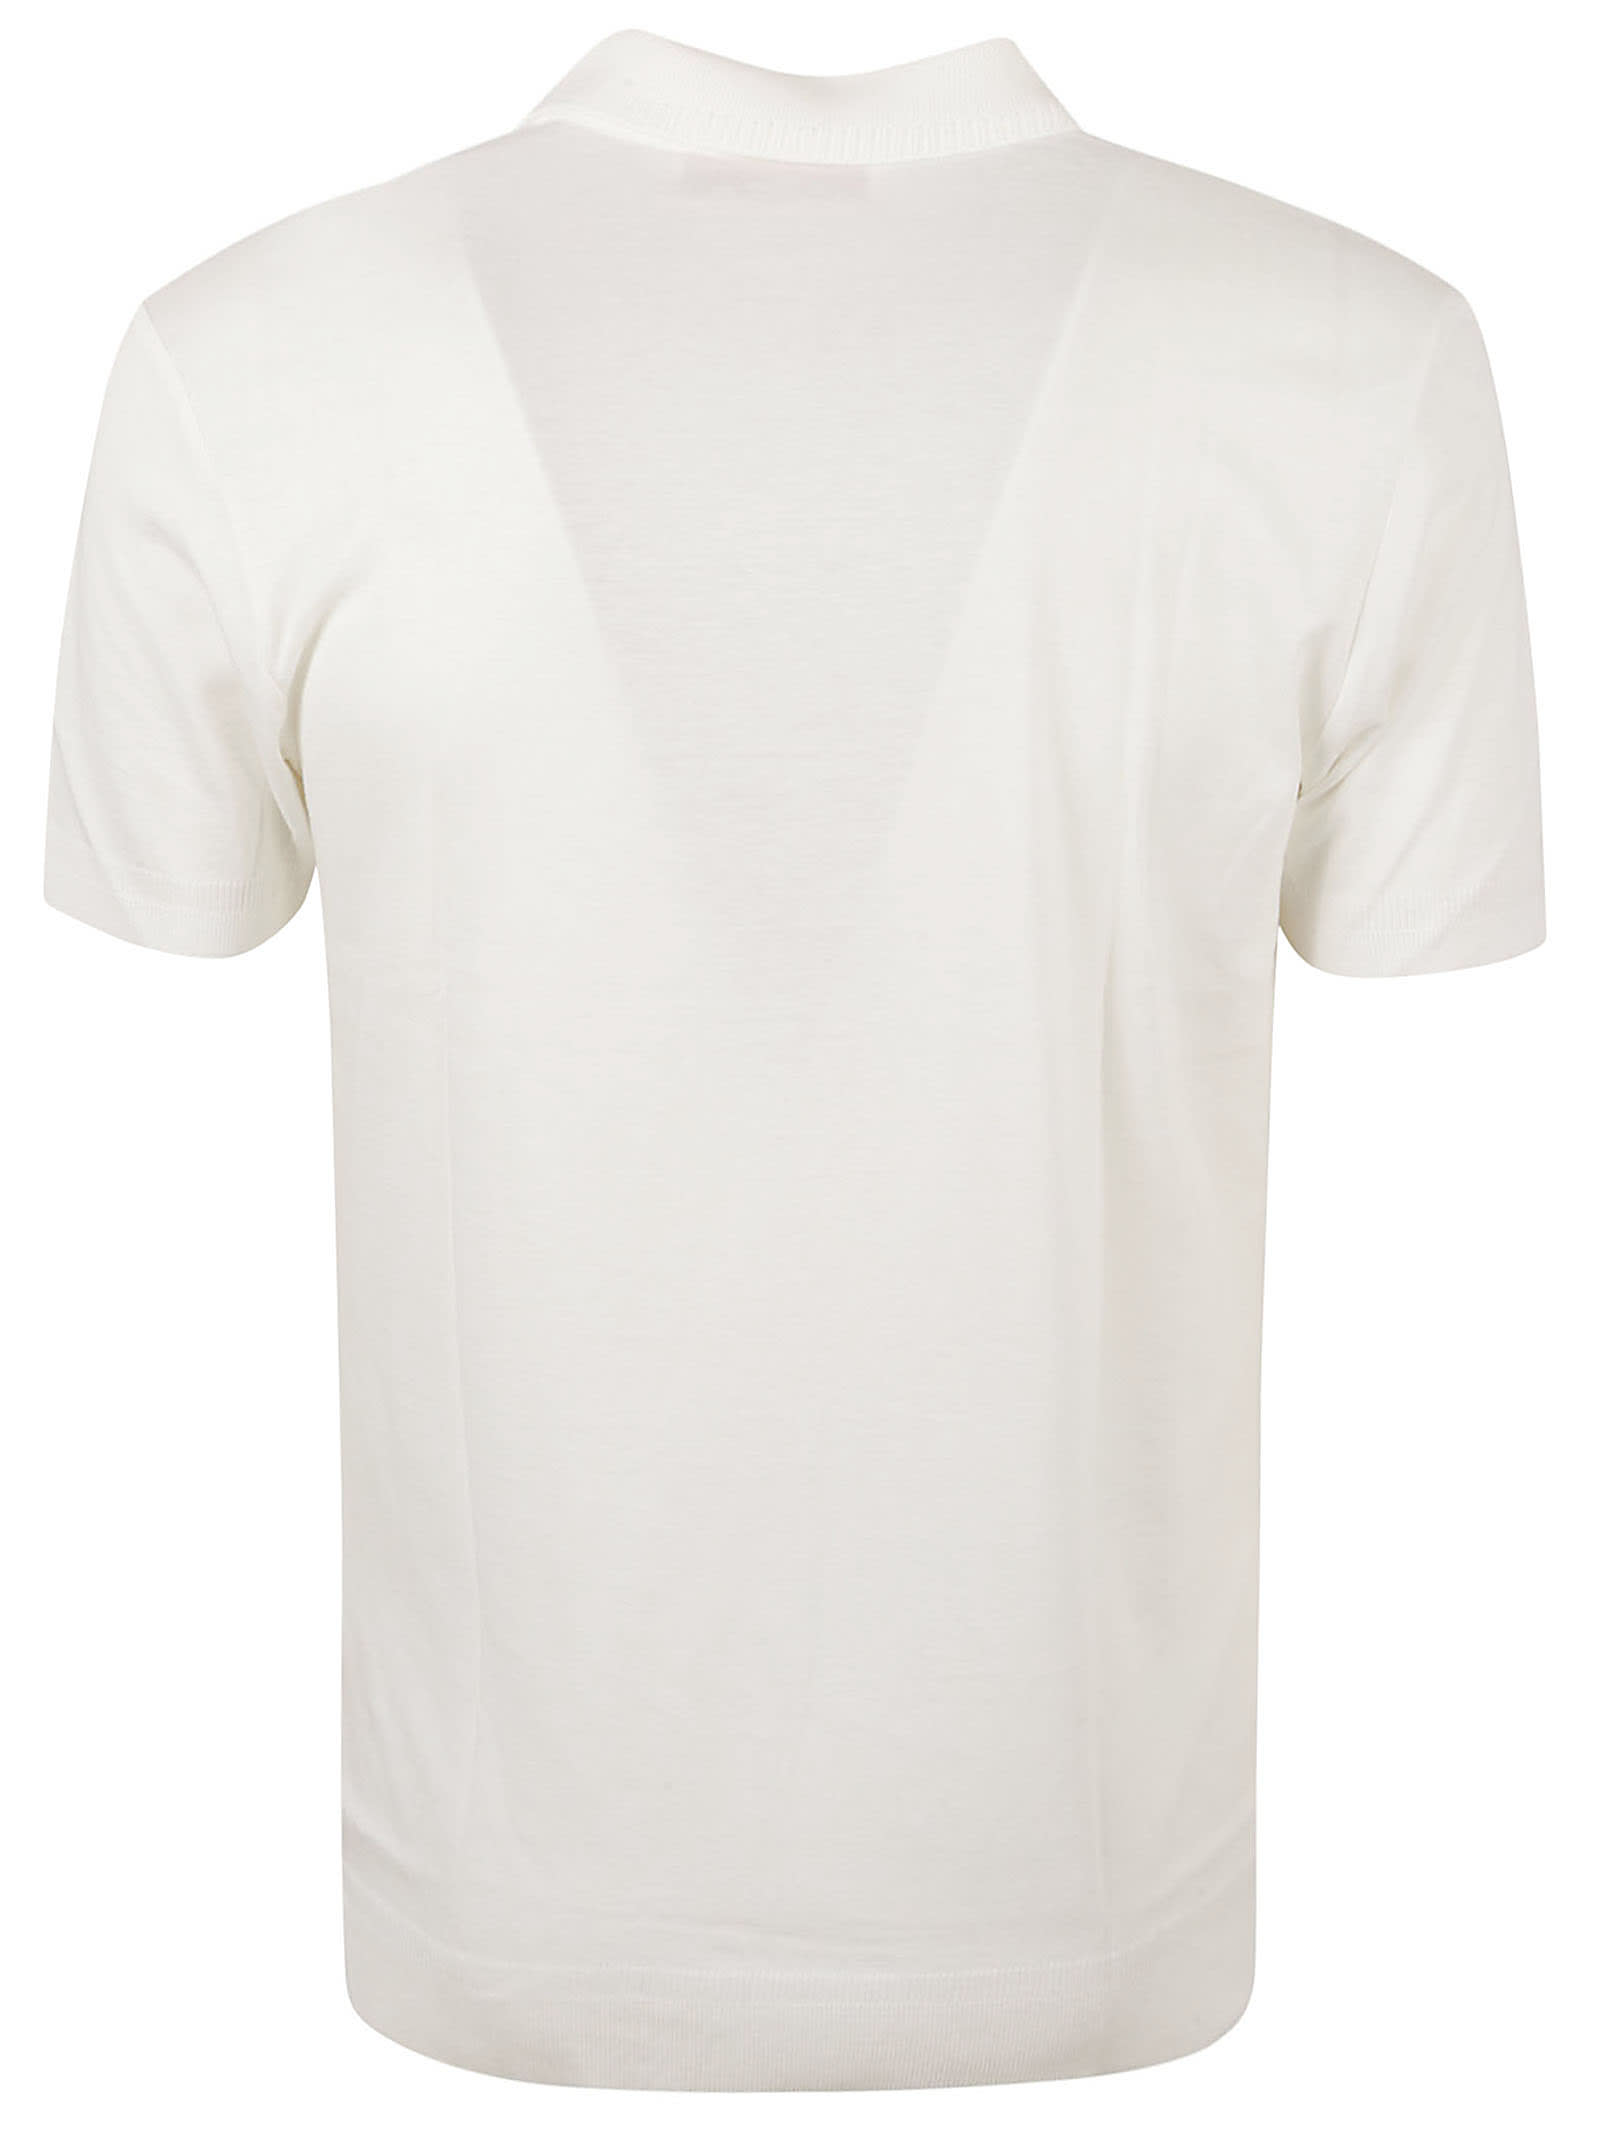 Shop Orlebar Brown Jarrett Jacquard Knit Polo Shirt In White